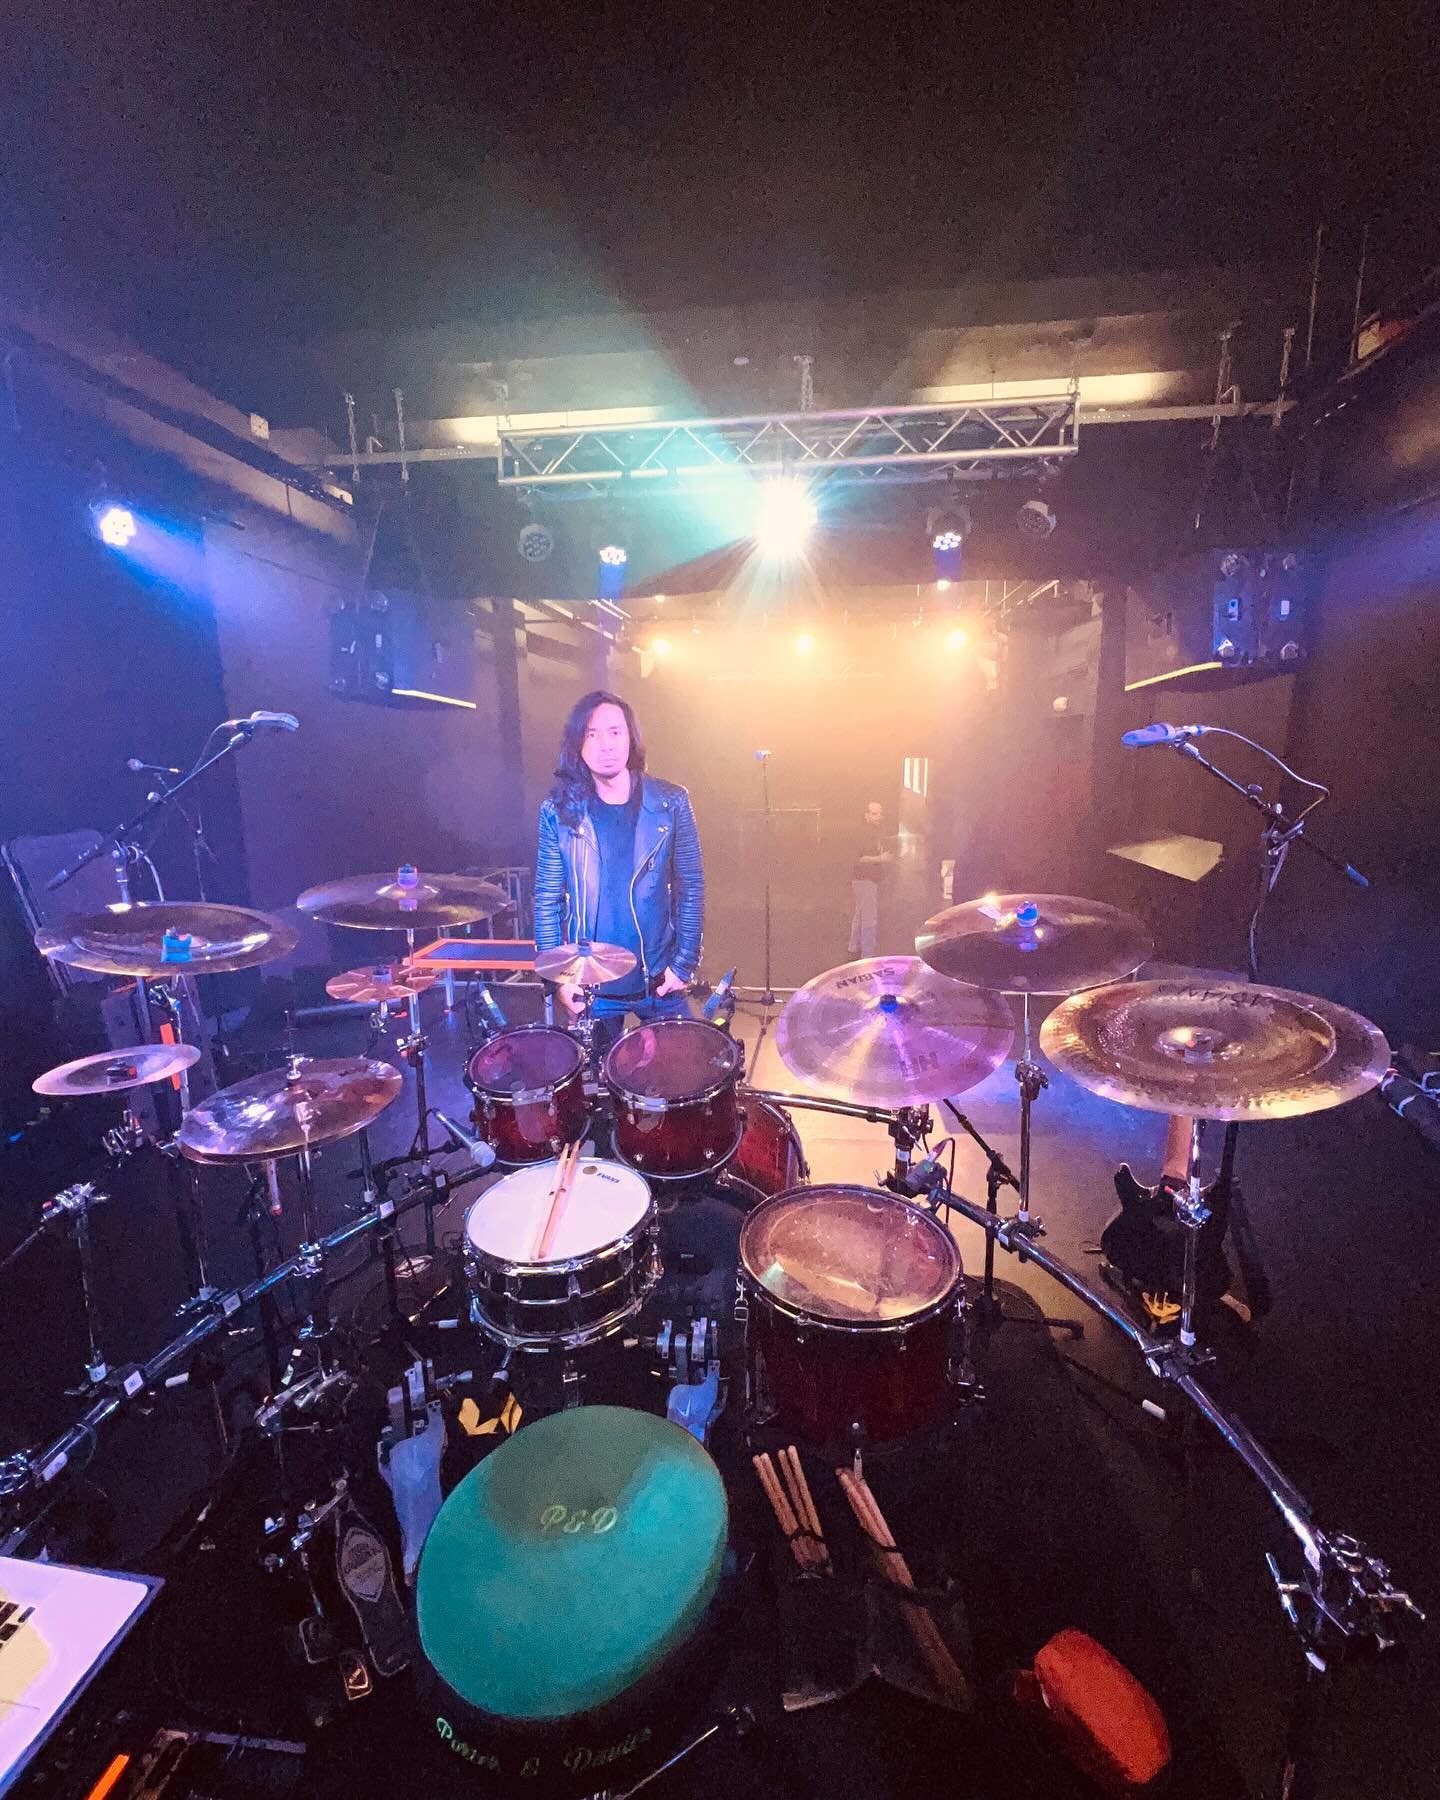 Antwerpen, Belgium tonight 🇧🇪 🤘🏻

@espritdairofficial @diamondblackofficial 
#drums #drummer